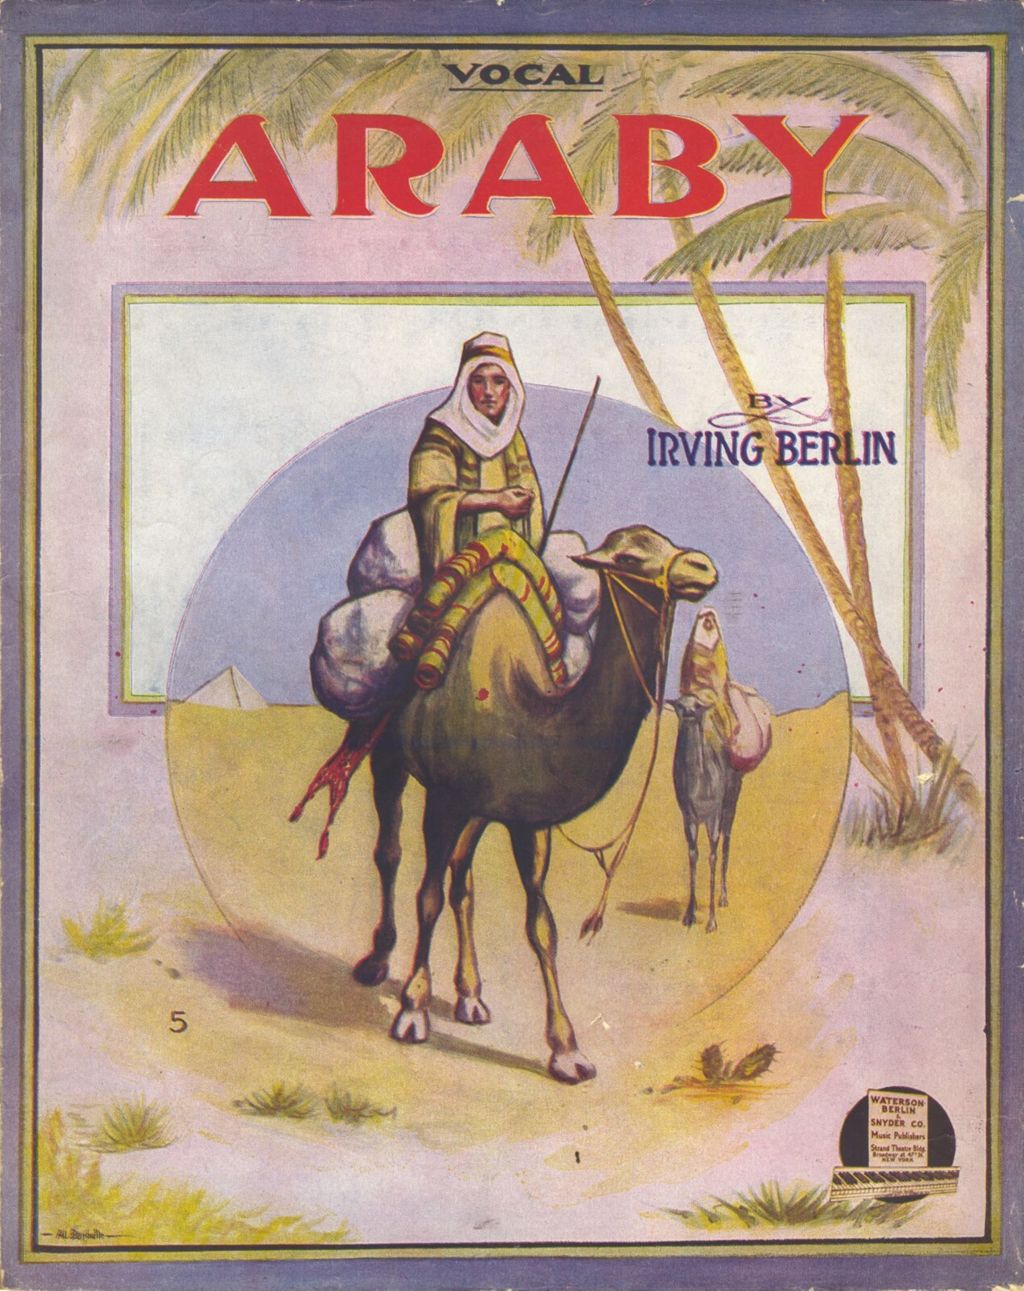 Miniature of Araby